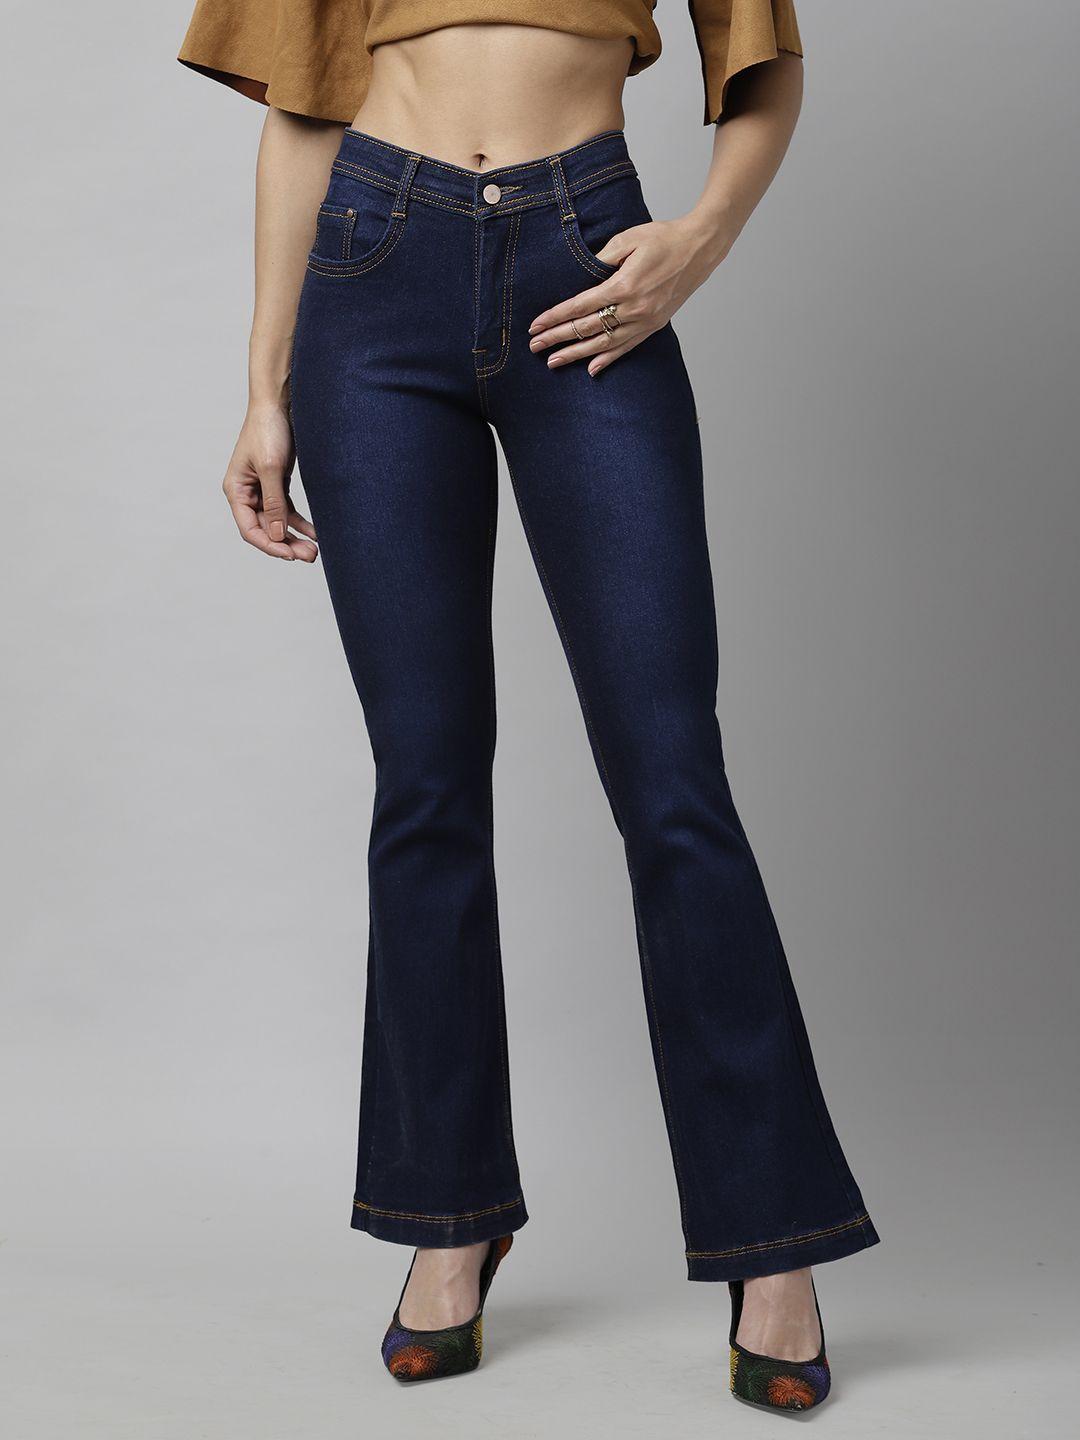 KASSUALLY Women Navy Blue Wide Leg Mid-Rise Clean Look Jeans